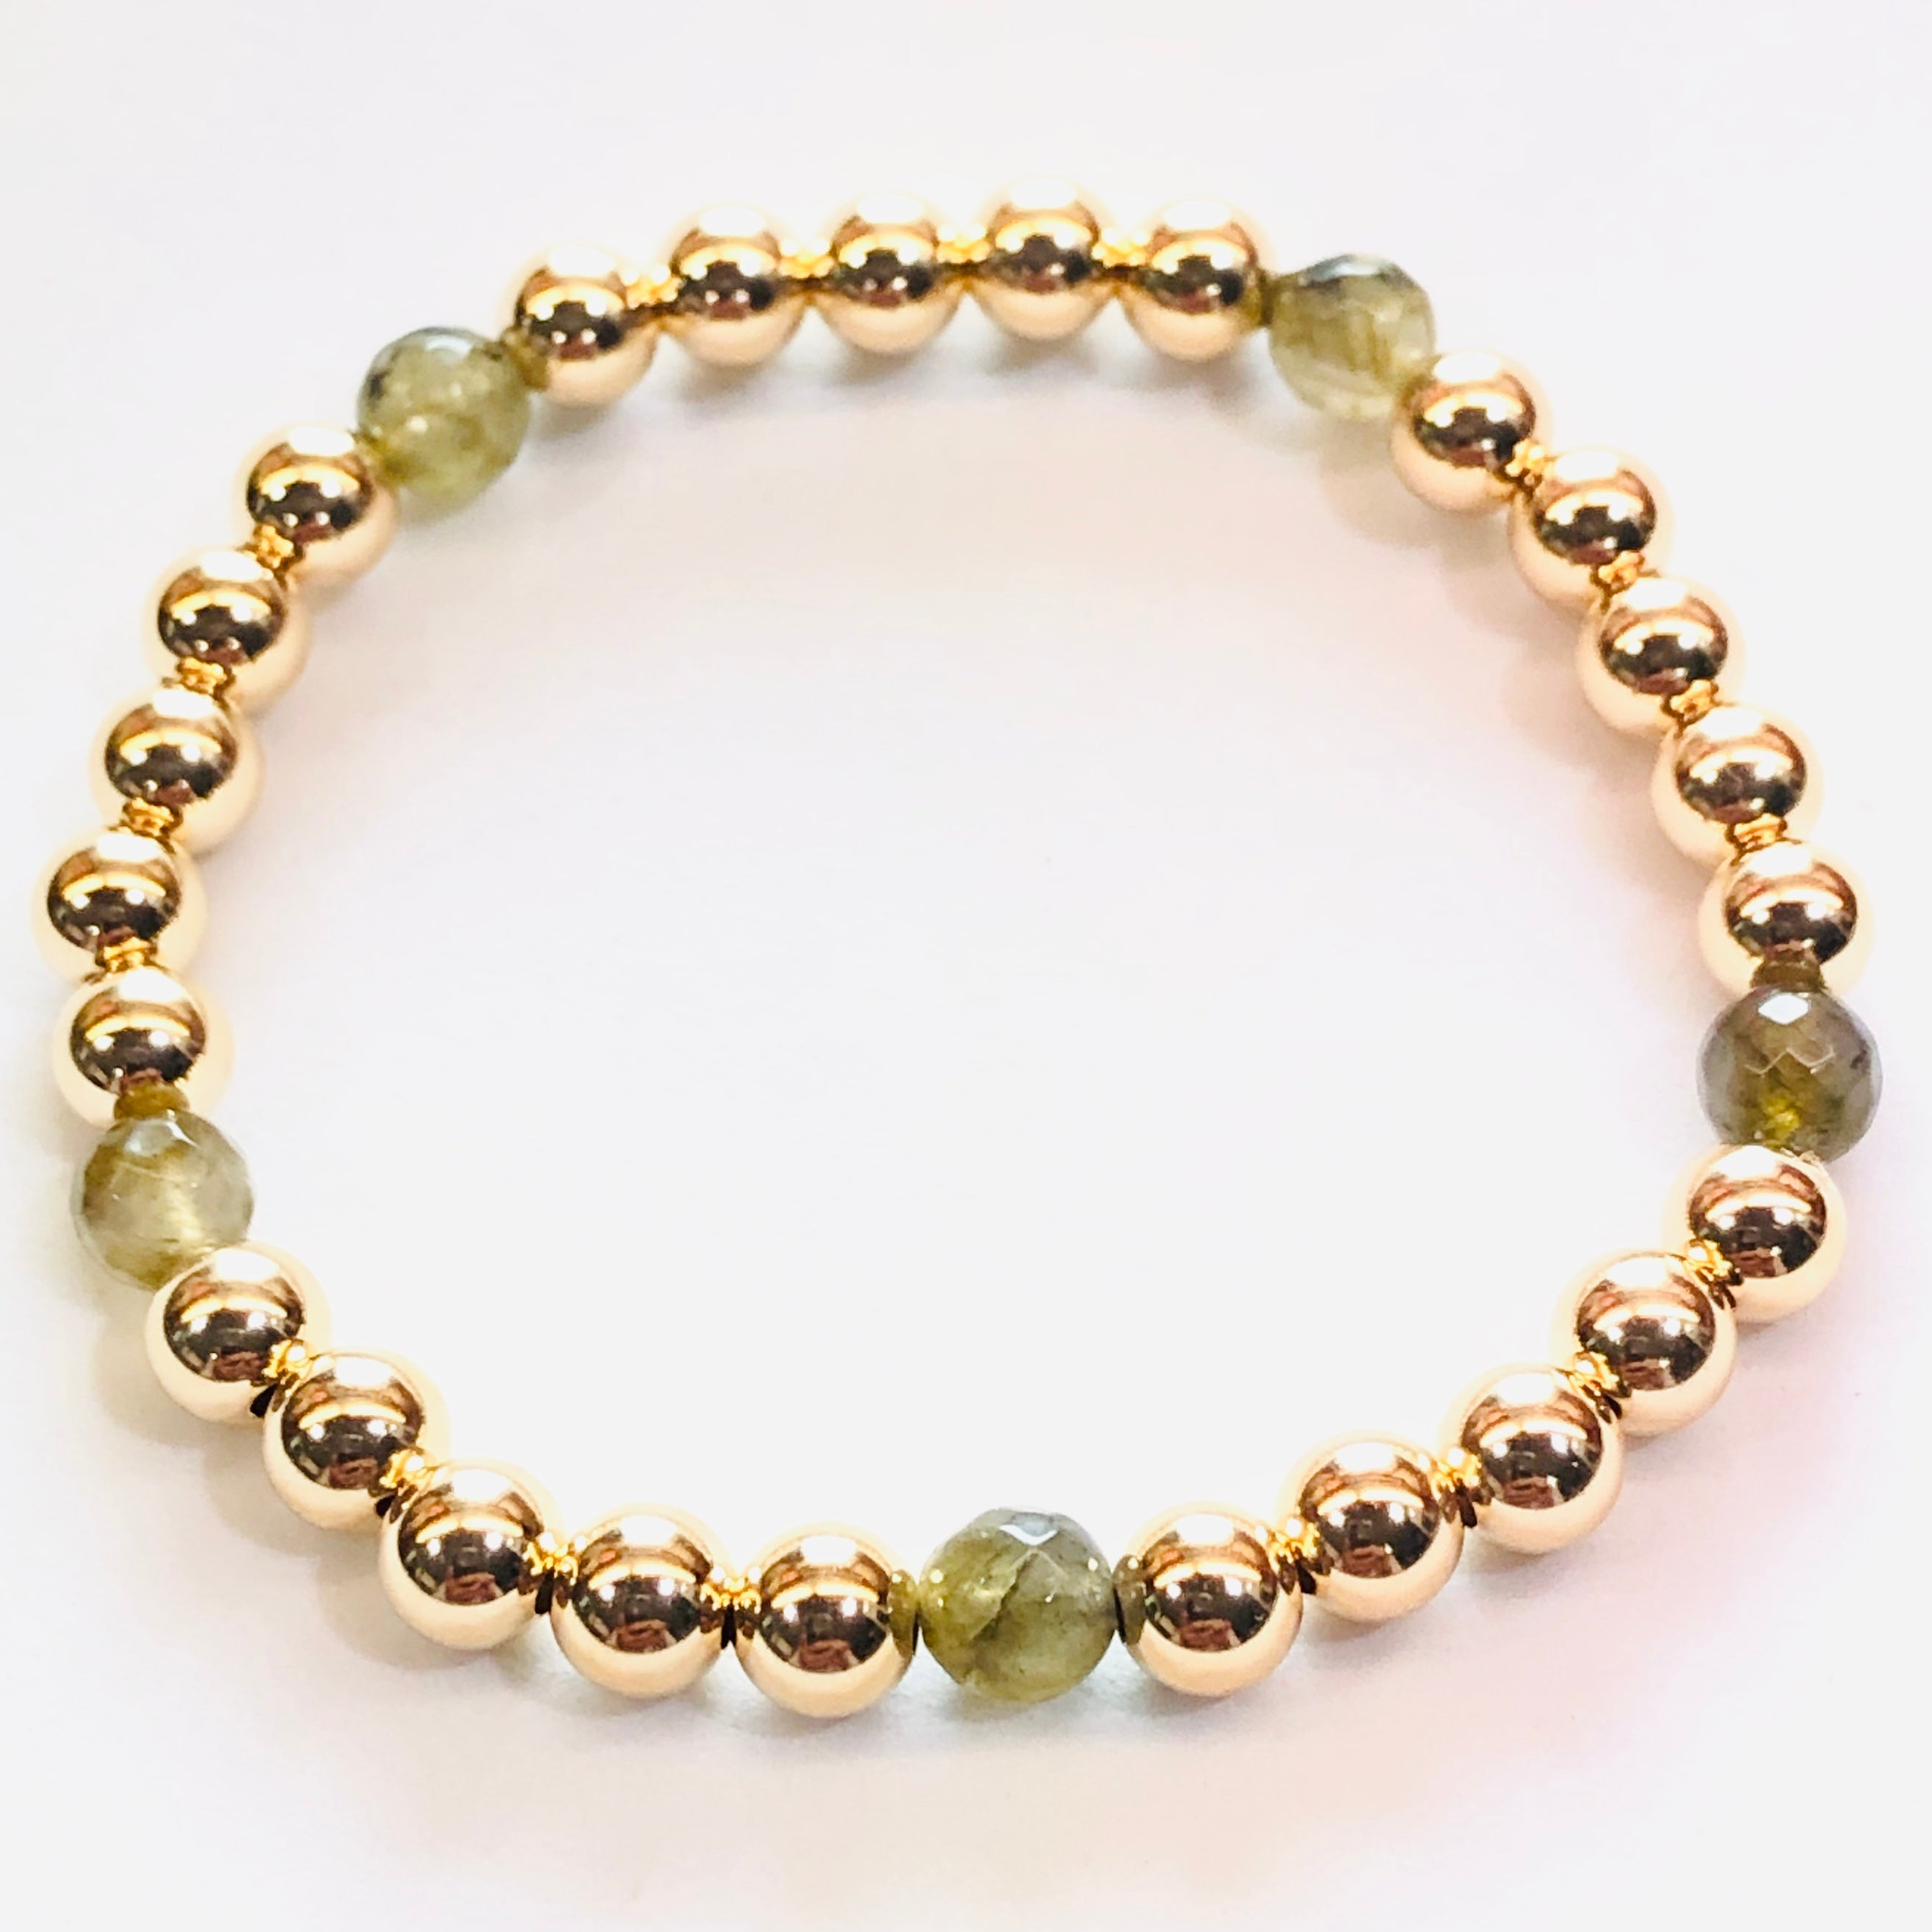 6mm 14kt Gold Filled Bead Bracelet with 5 Labradorite Beads